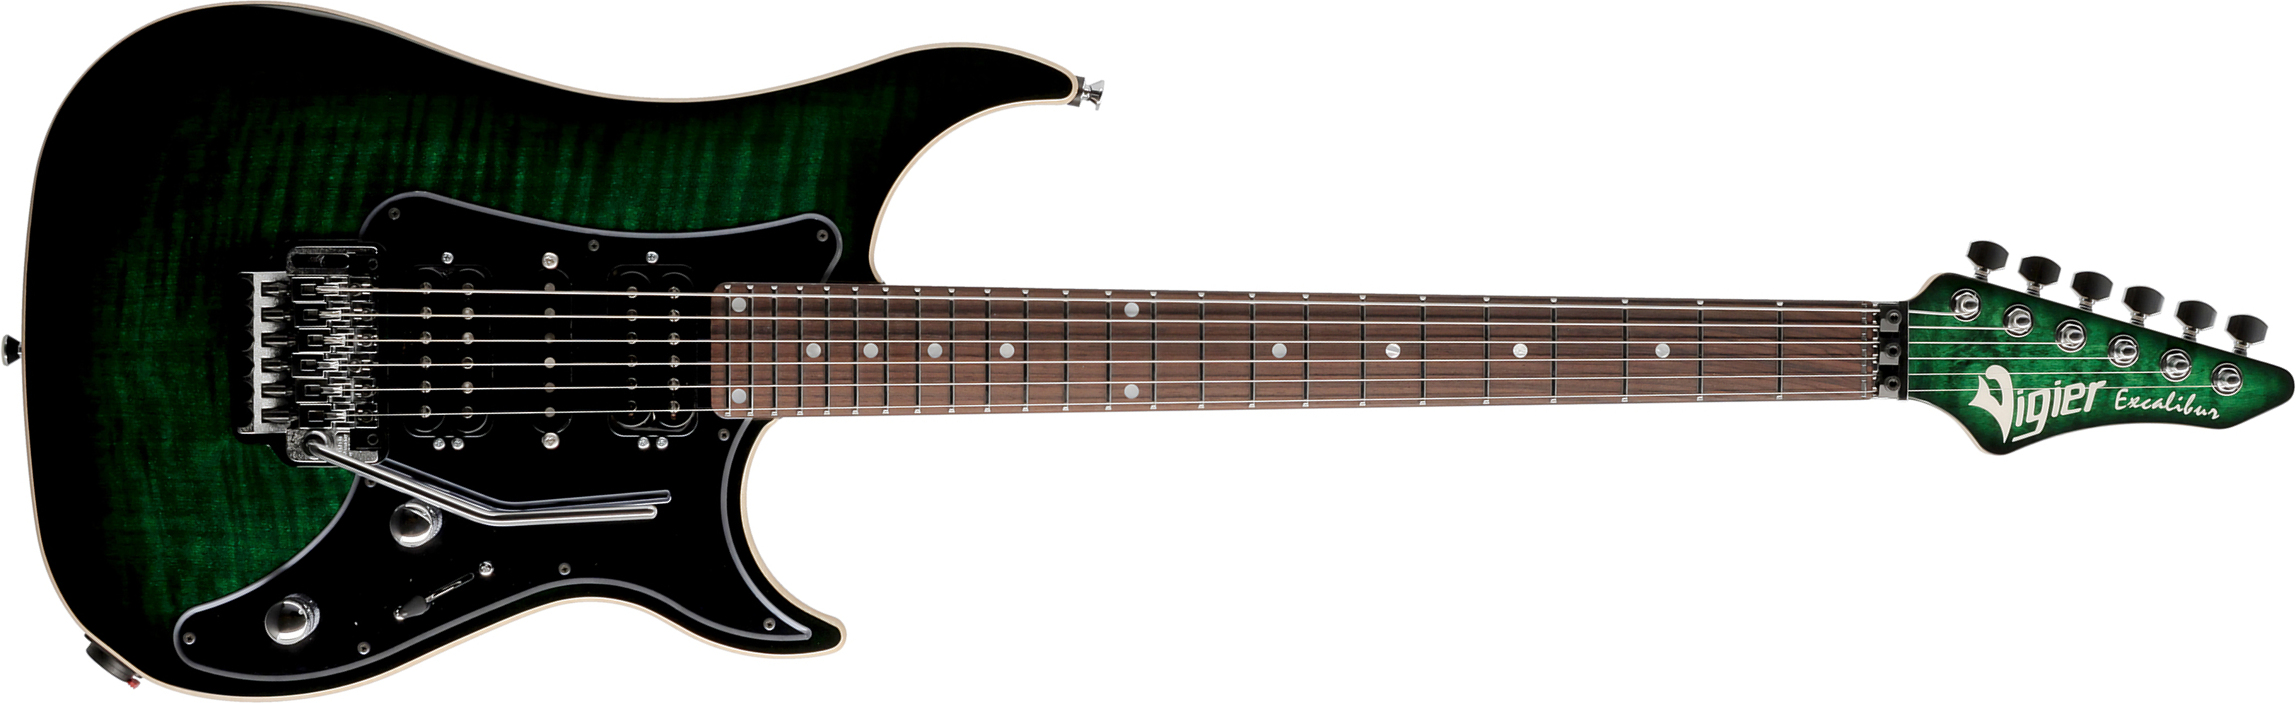 Vigier Excalibur Custom Hsh Fr Rw - Mysterious Green - Str shape electric guitar - Main picture